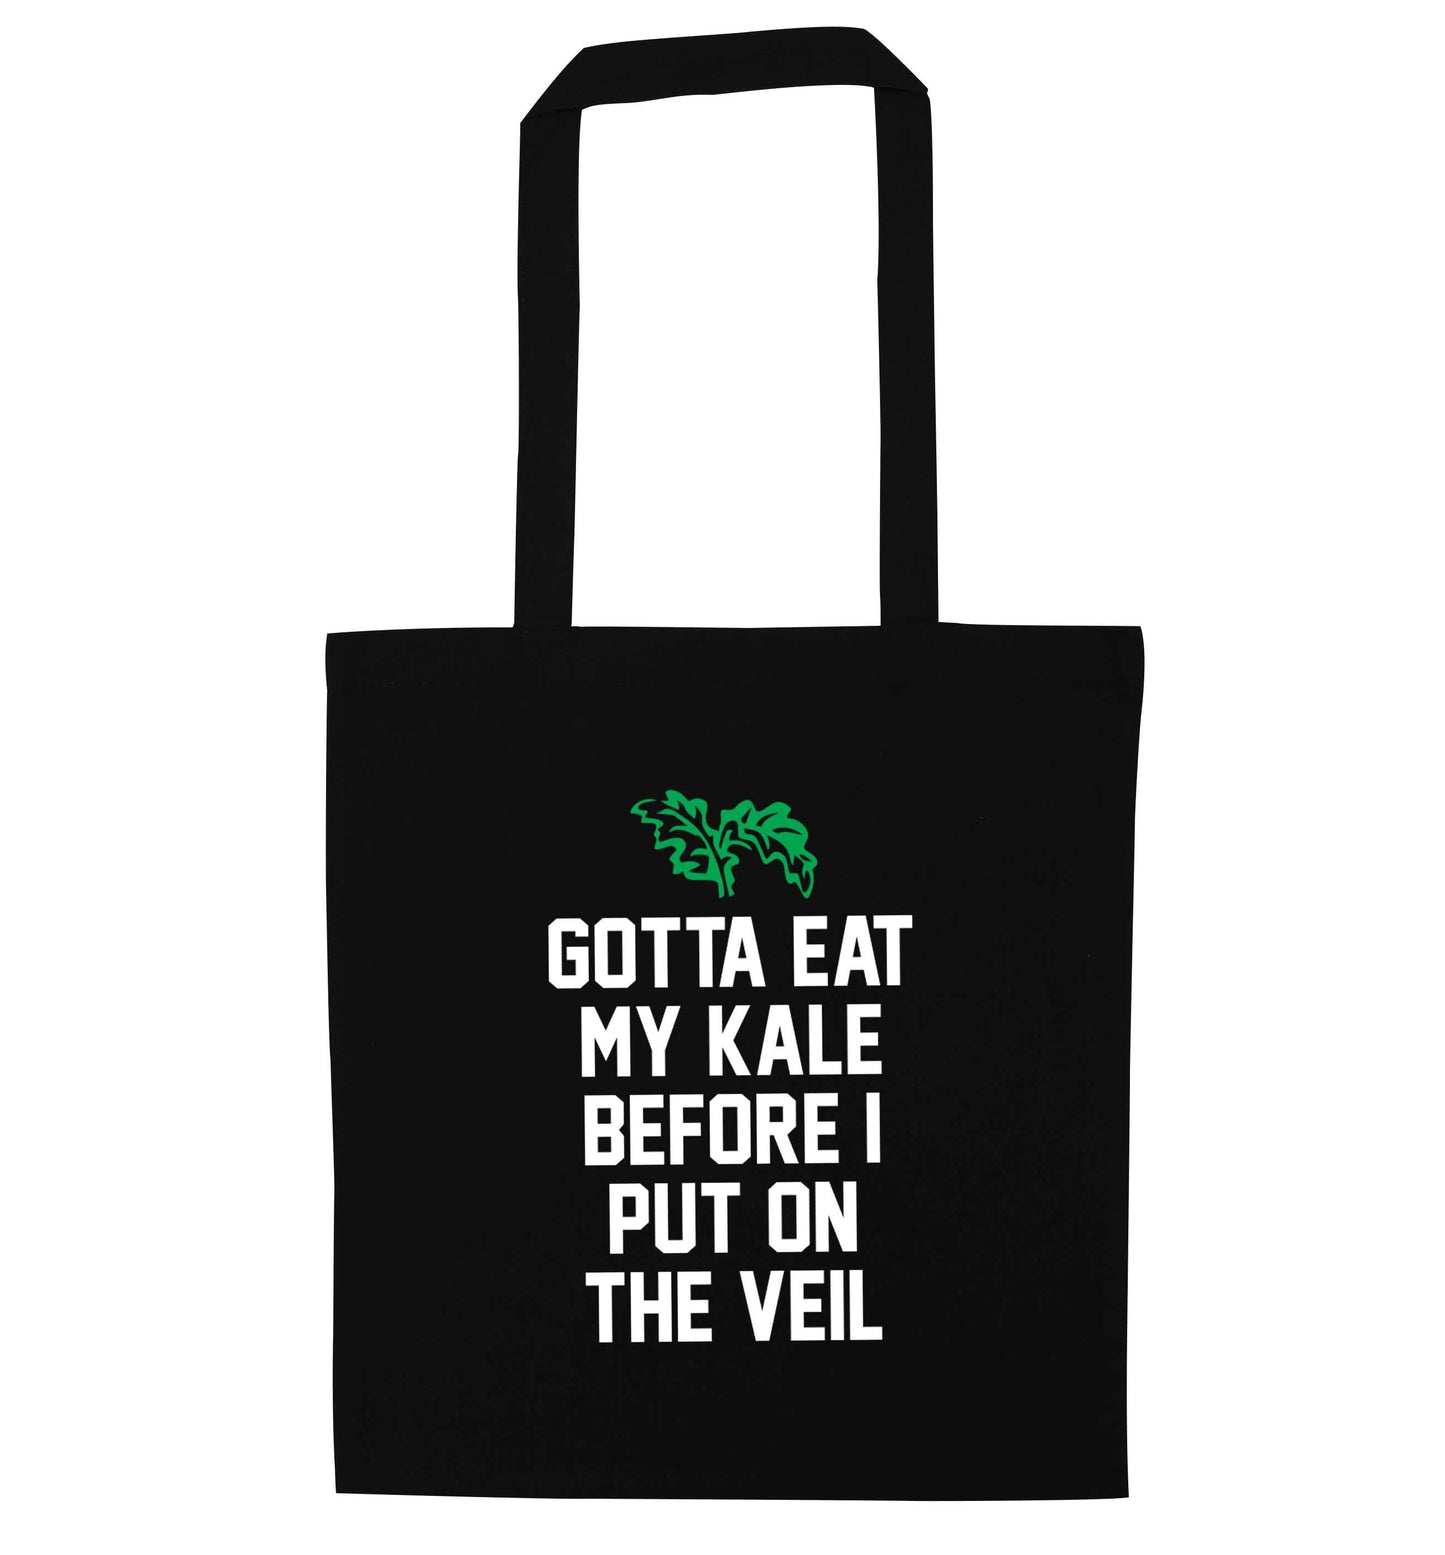 Gotta eat my kale before I put on the veil black tote bag